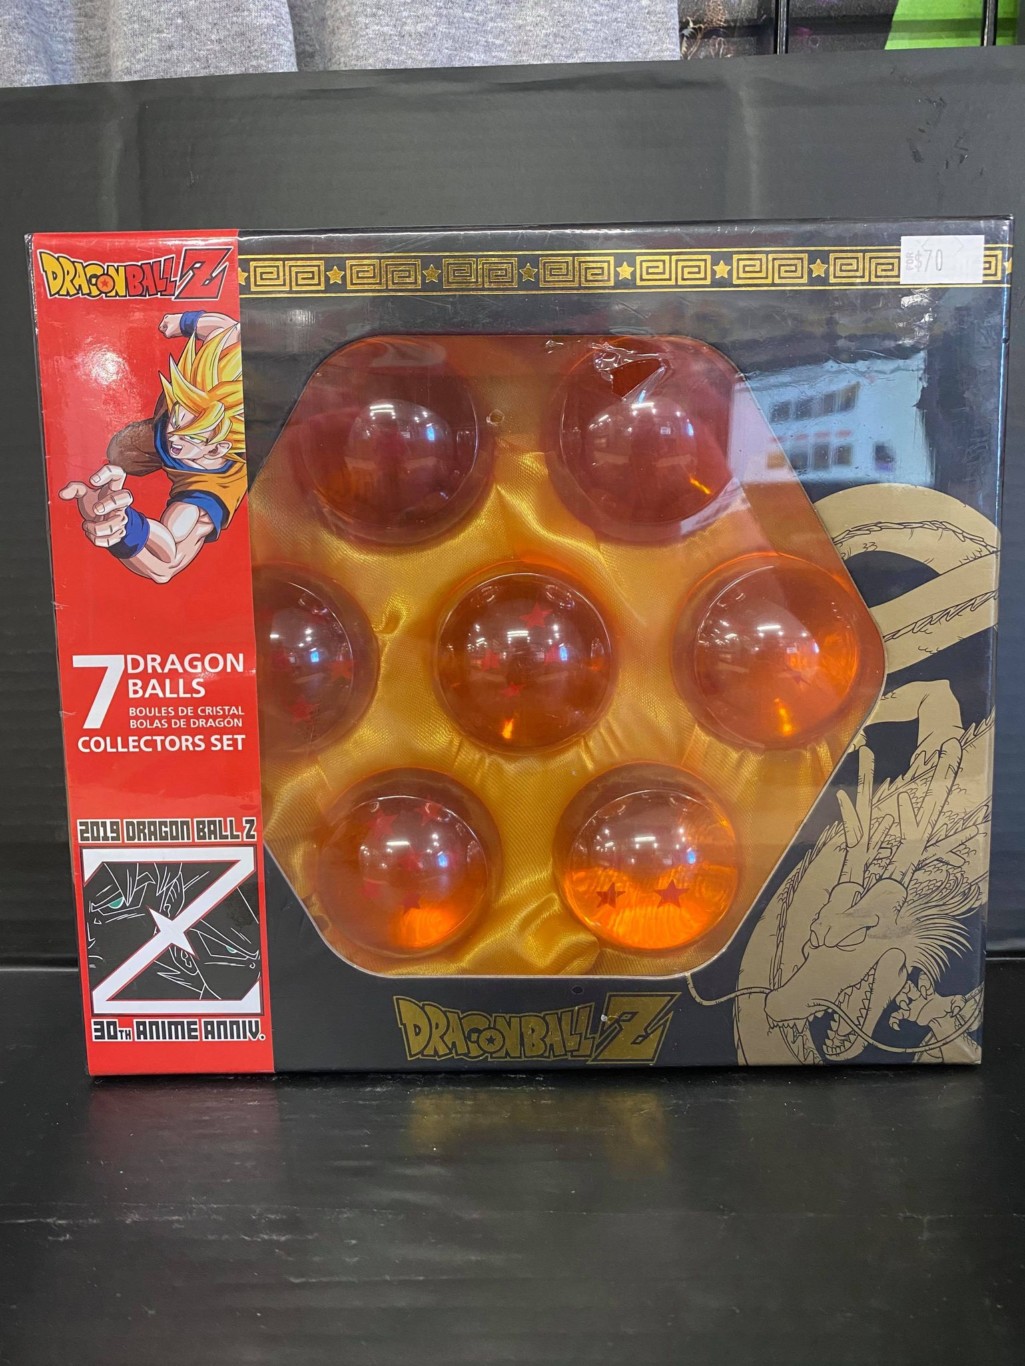 7 Dragon Balls Toei Animation Dragon Ball Z Collectors Set Vintage Toy Mall